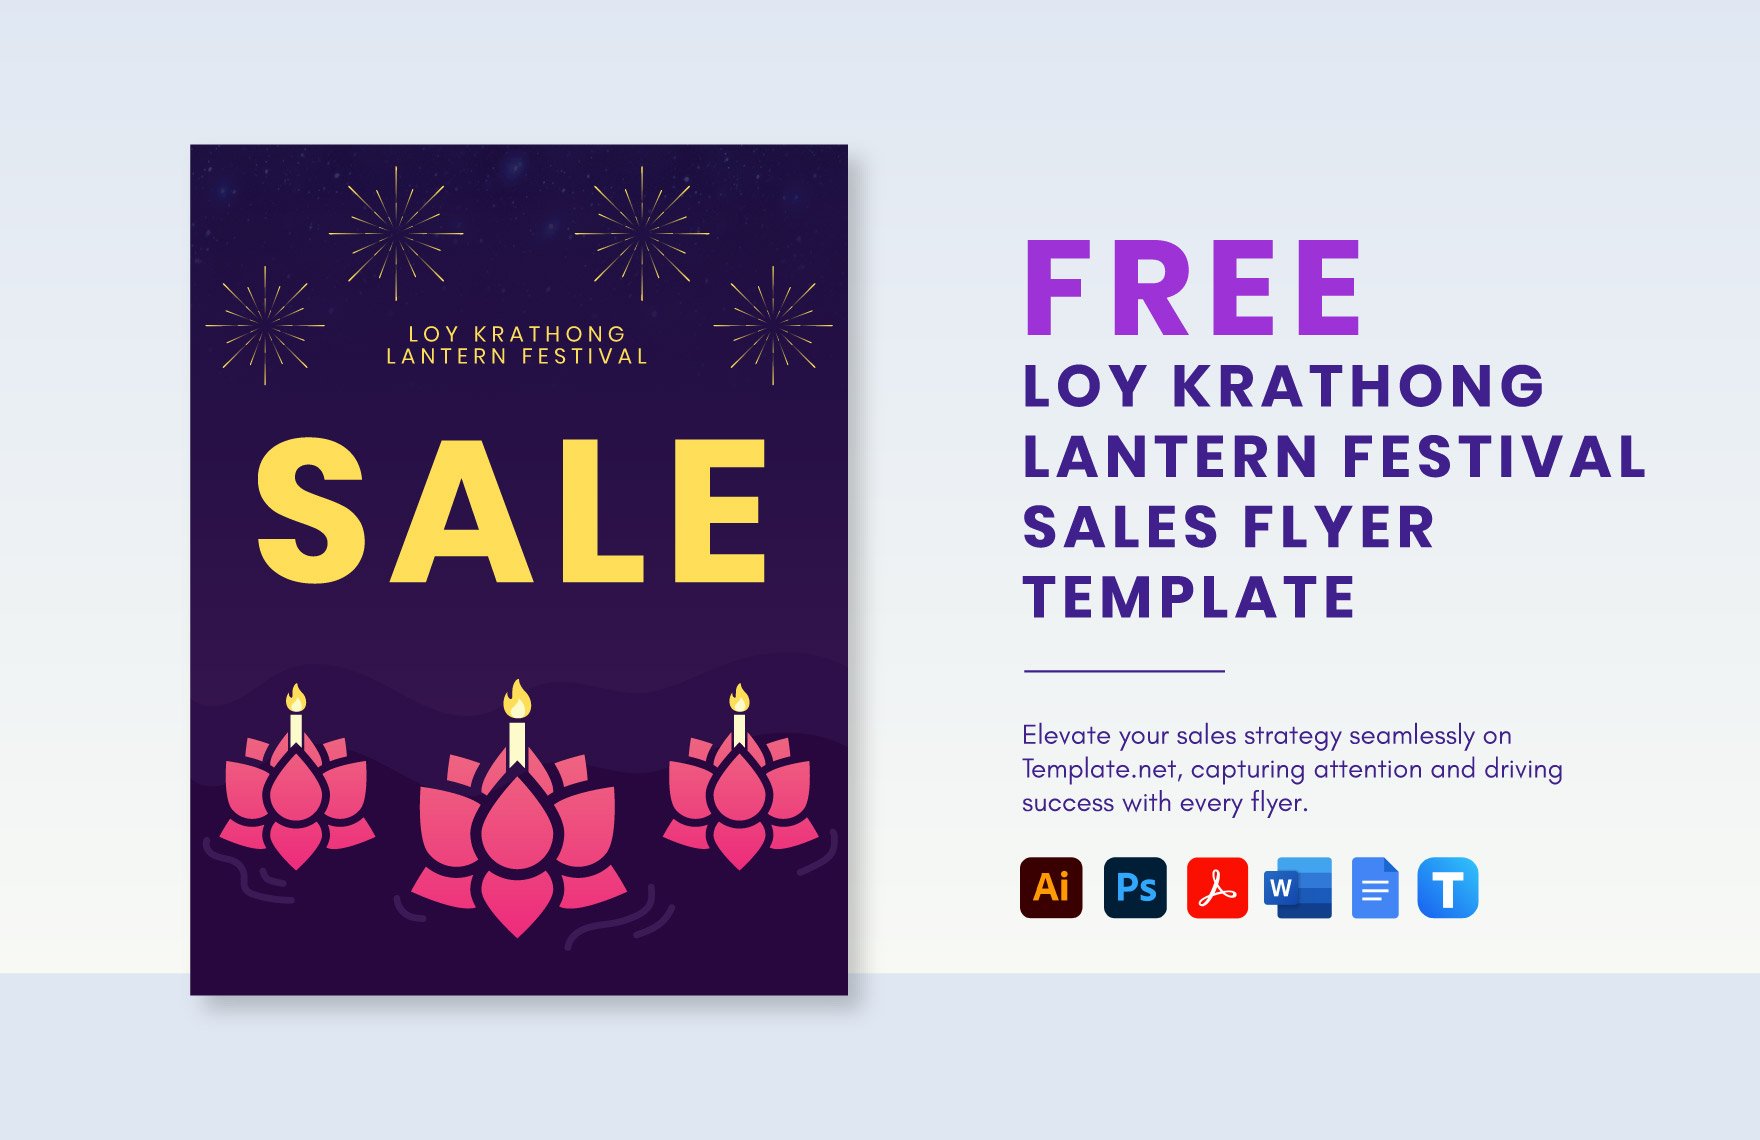 Loy Krathong Lantern Festival Sales Flyer Template